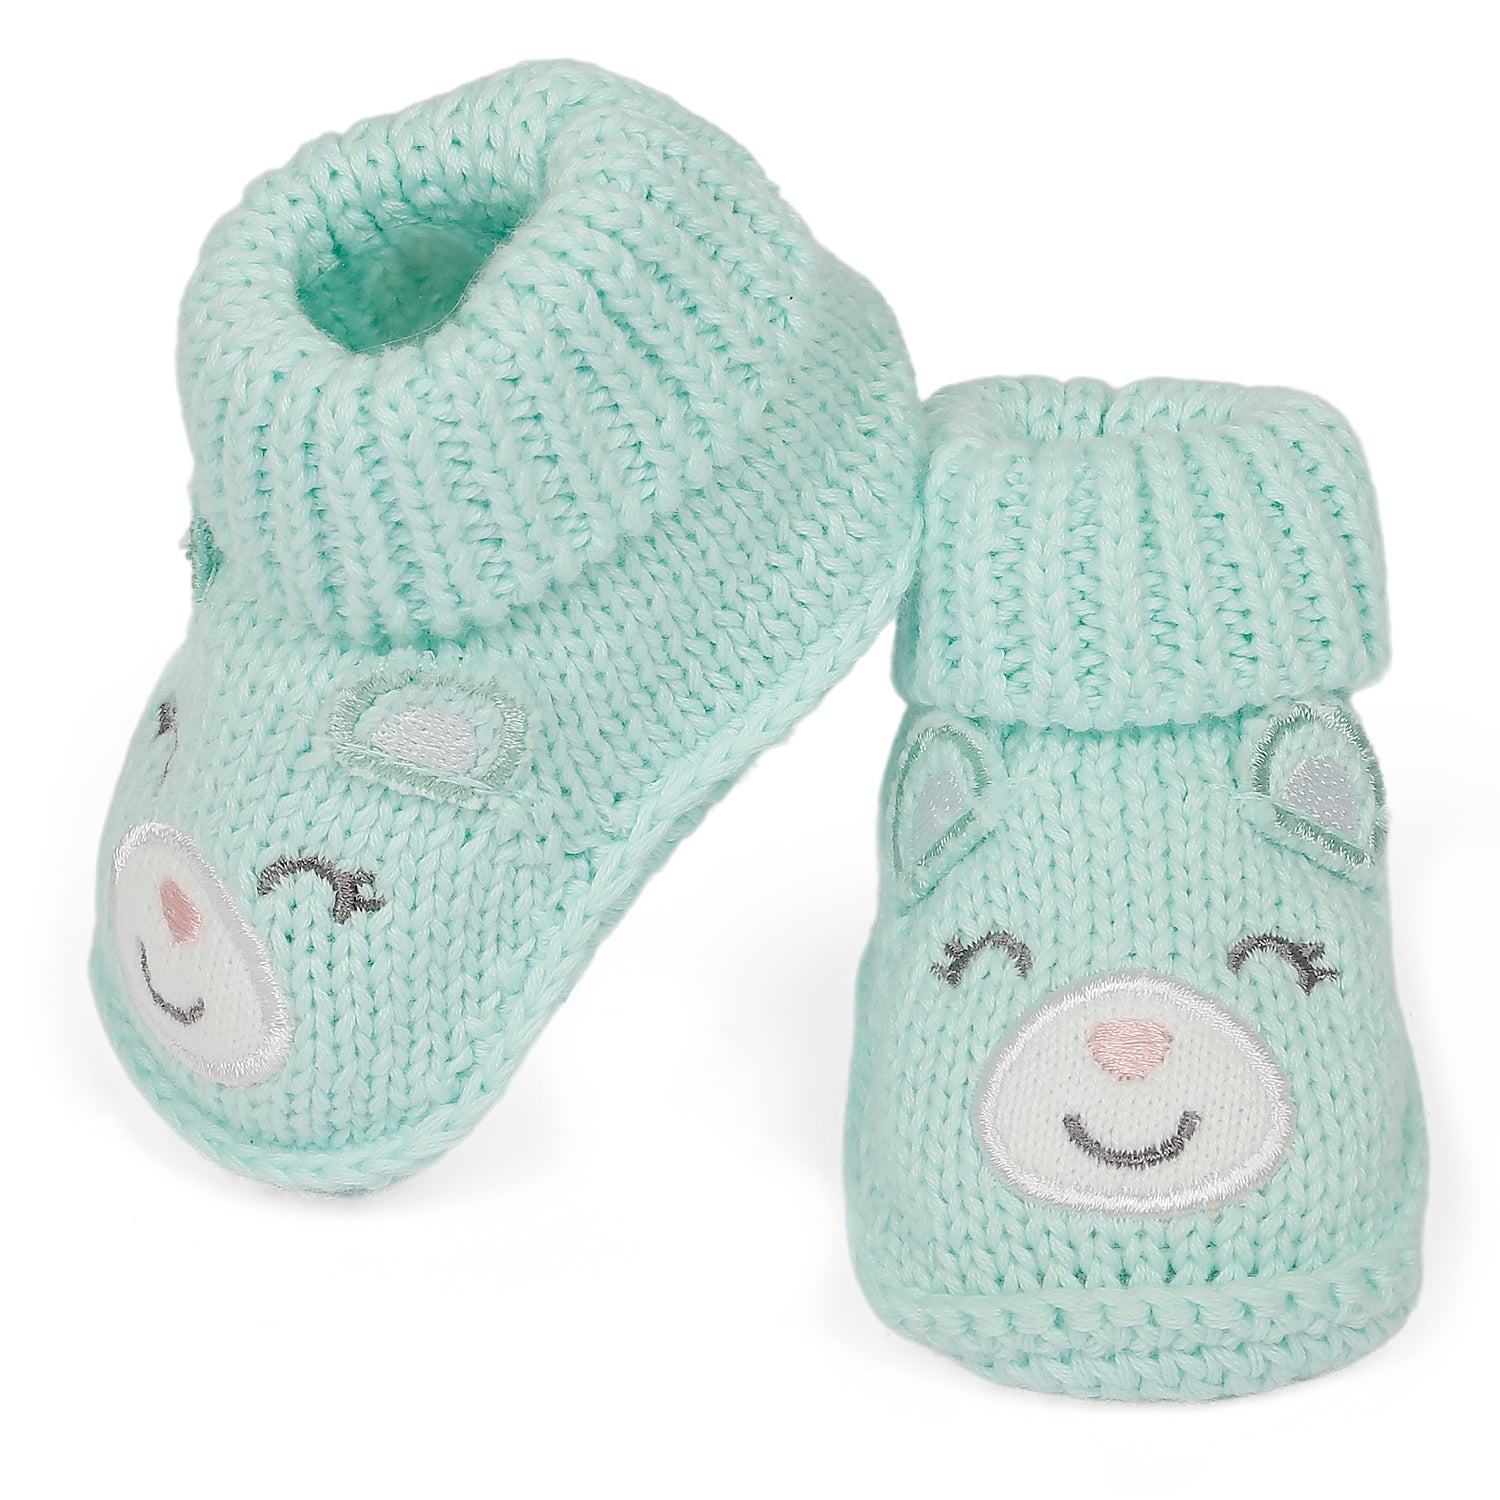 Blushing Newborn Crochet Socks Booties - Mint Green - Baby Moo